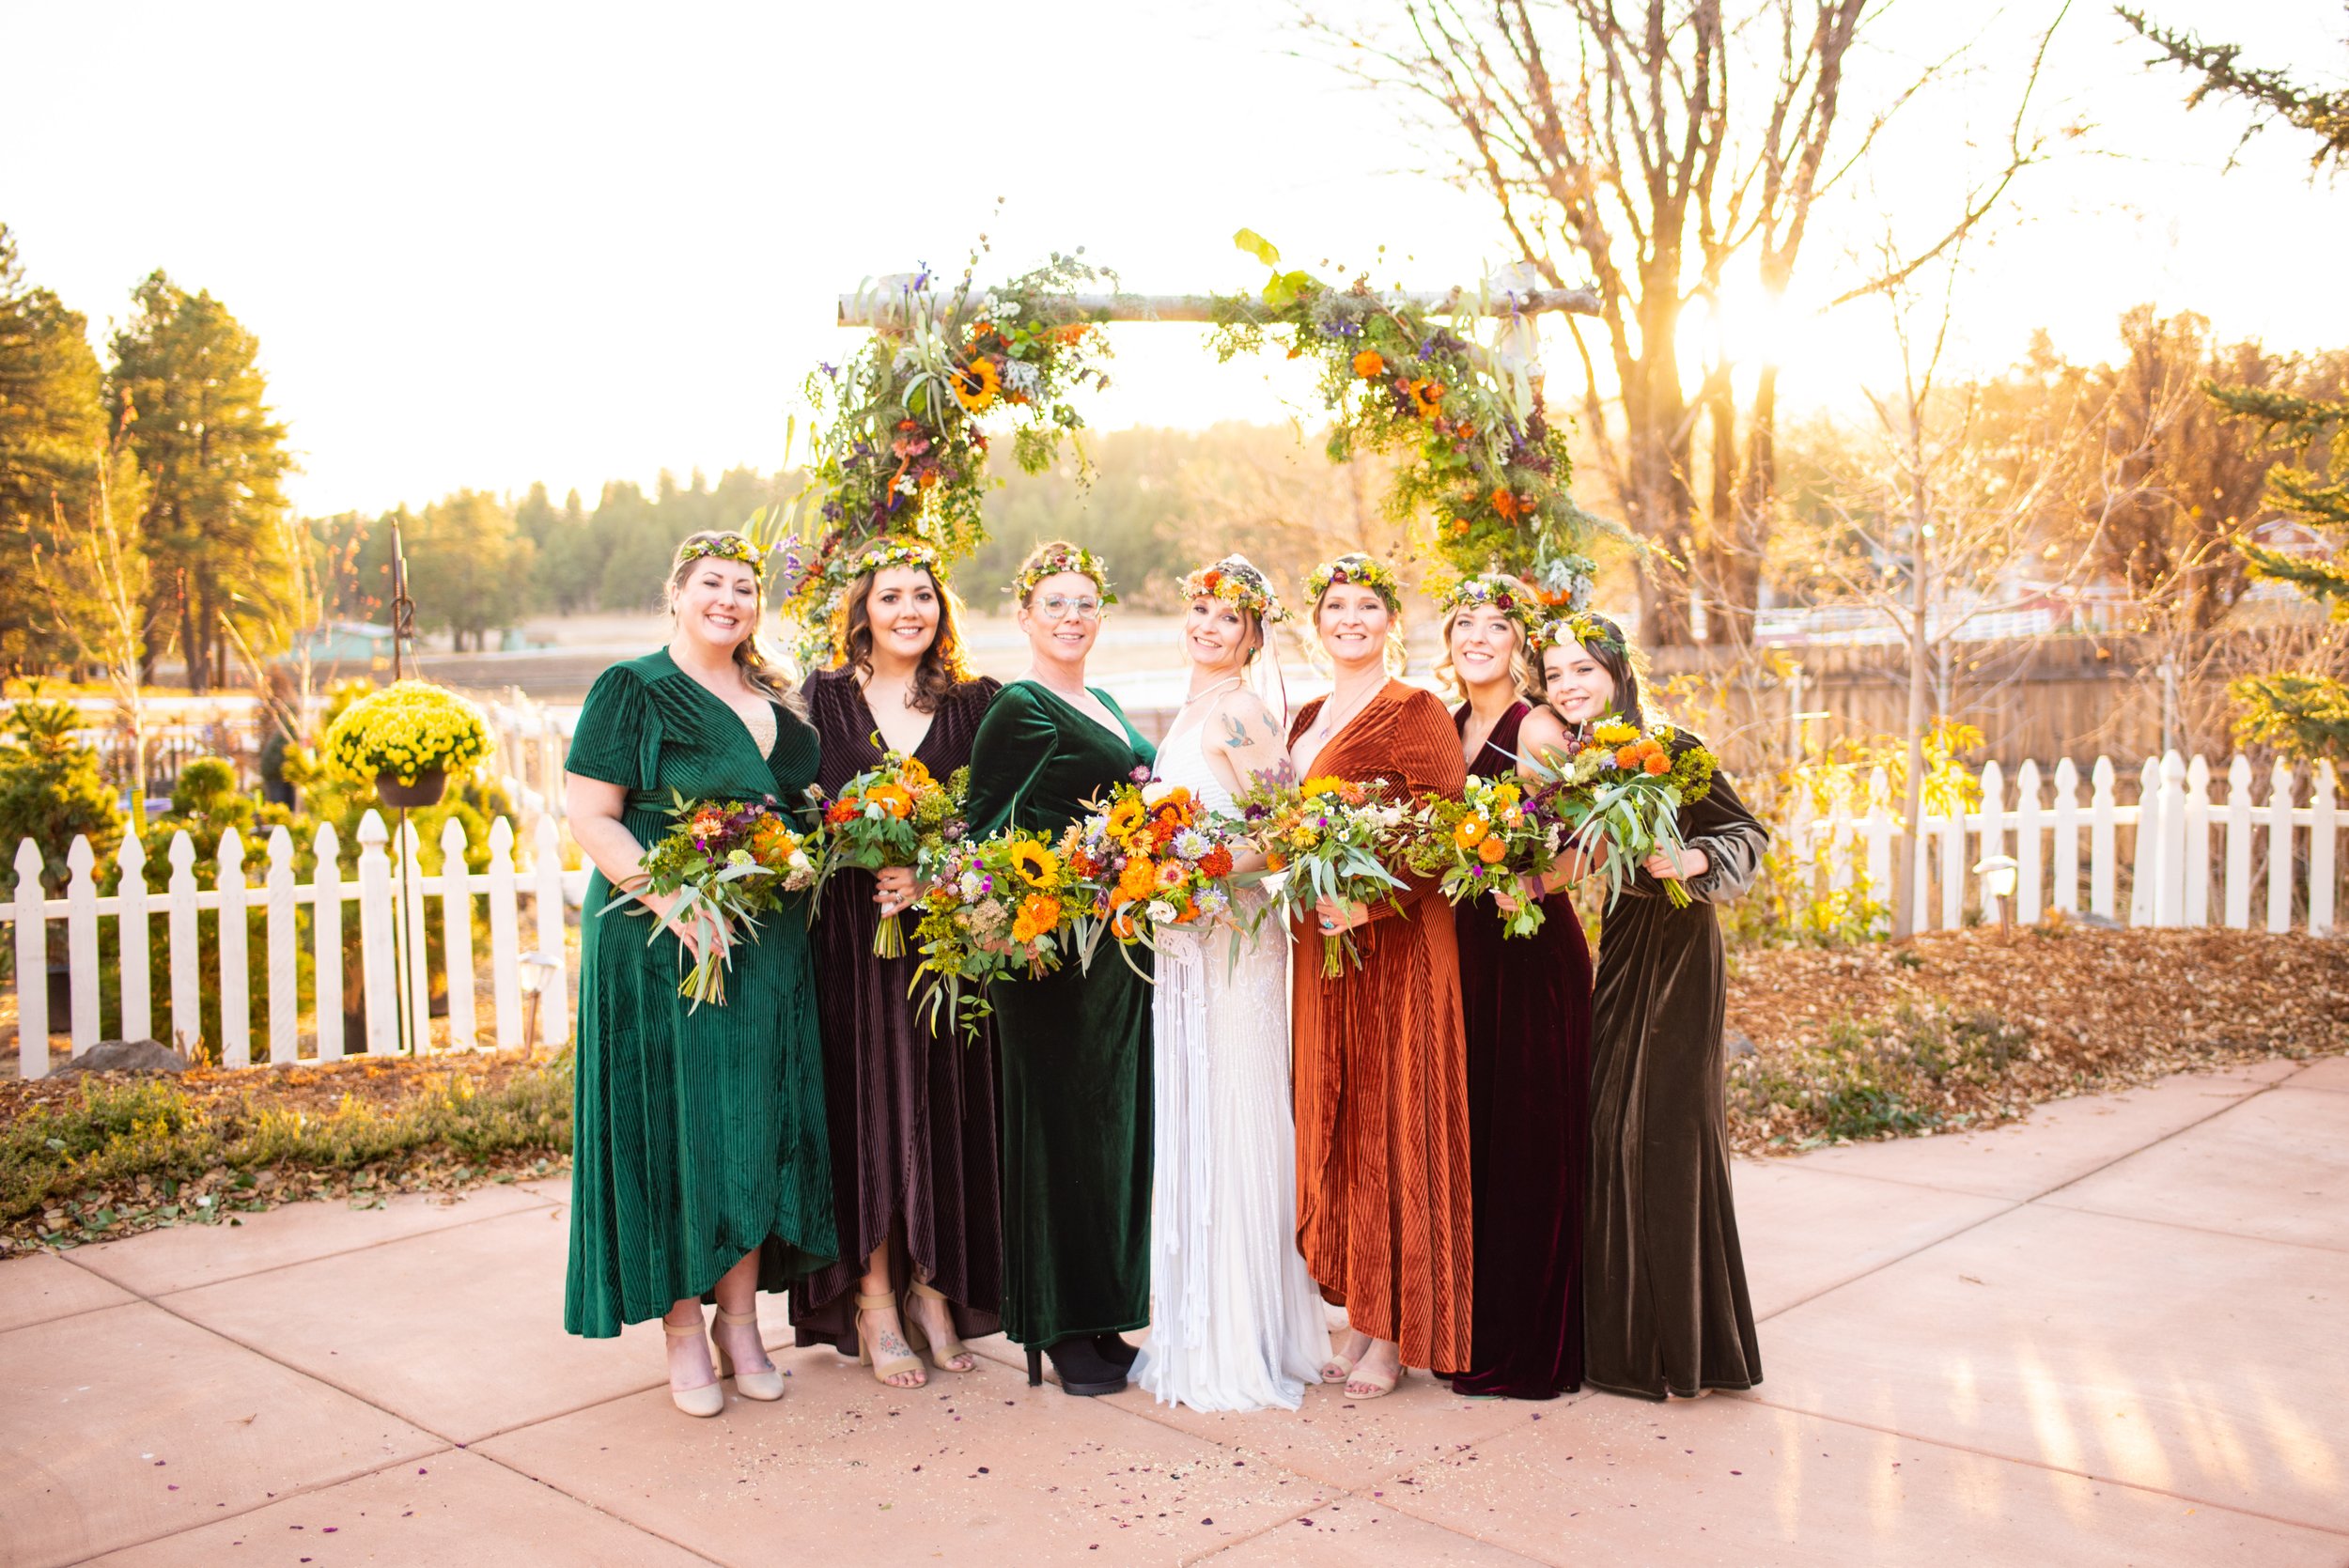 Vibrant autumn fairytale wedding bridesmaids